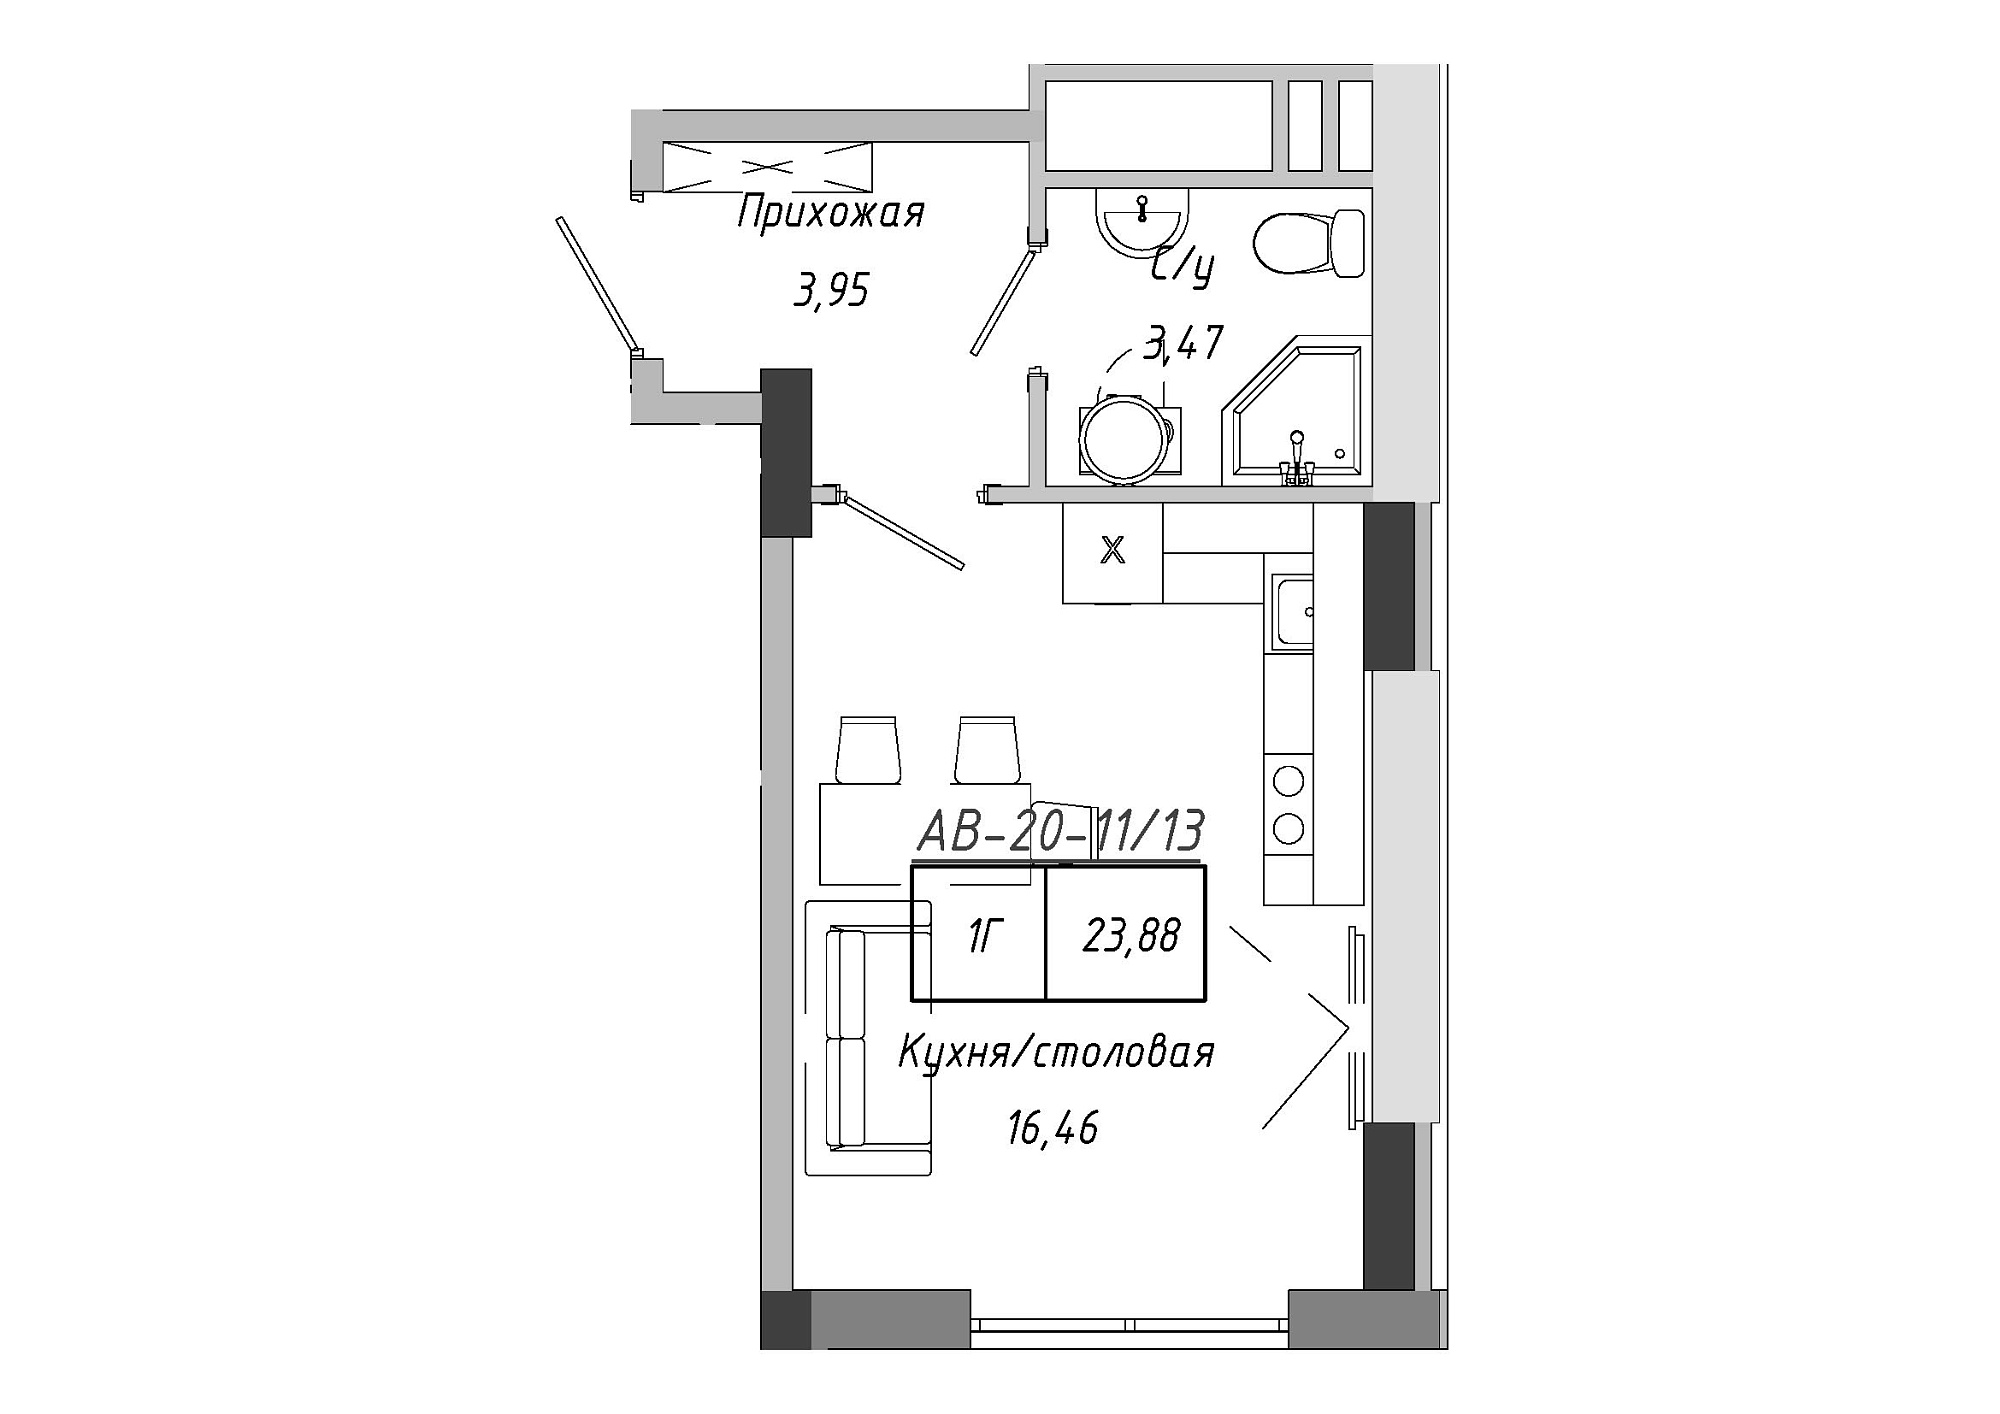 Planning Smart flats area 23.4m2, AB-20-11/00013.